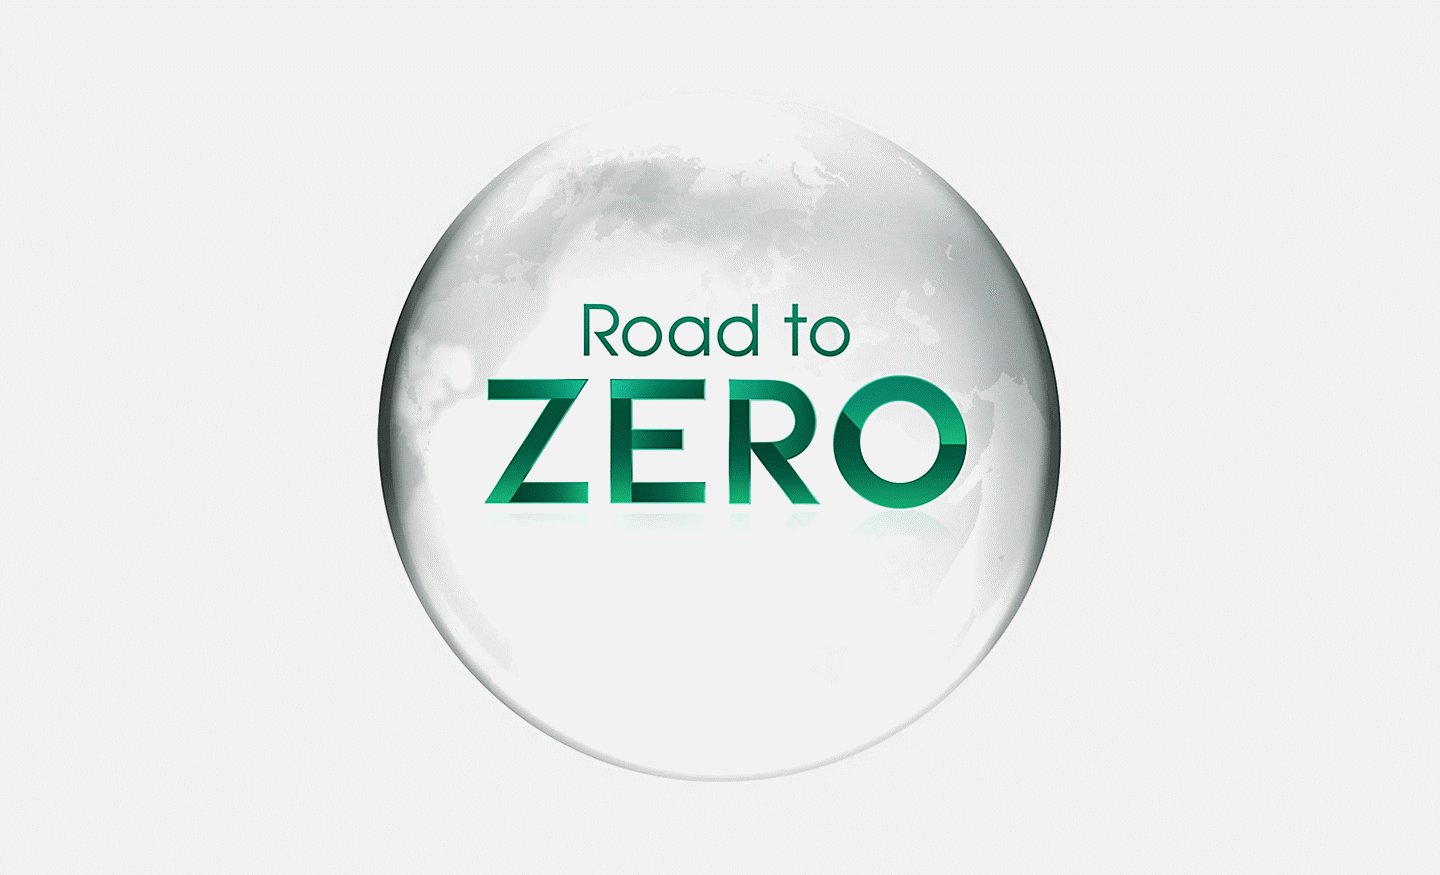 صورة توضح مبادرة سوني "Road to Zero"